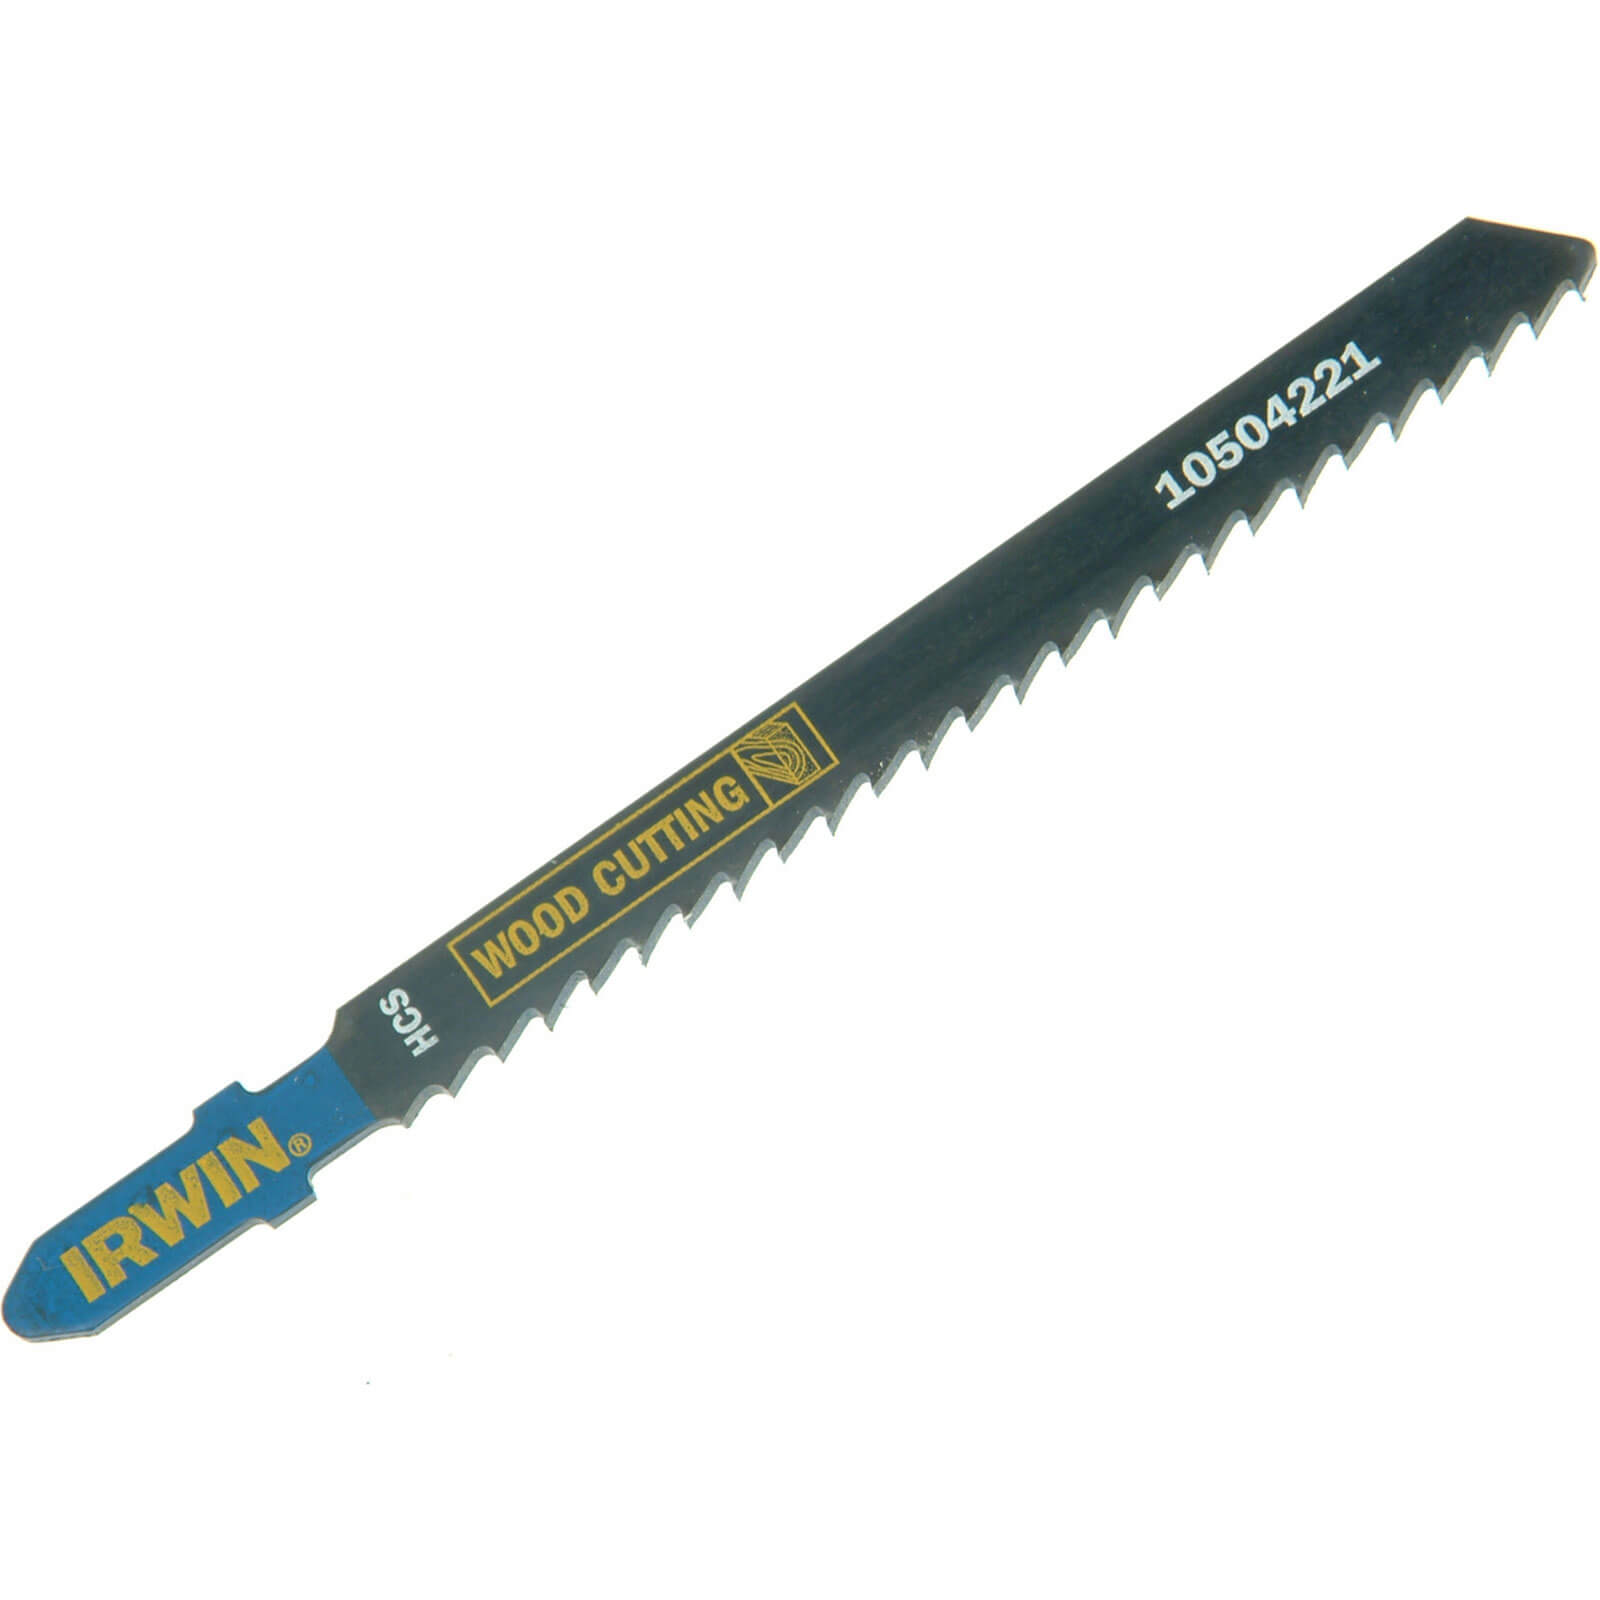 Photos - Power Tool Accessory IRWIN T144DP T Shank Wood Cutting Jigsaw Blades Pack of 5 IRW10504410 